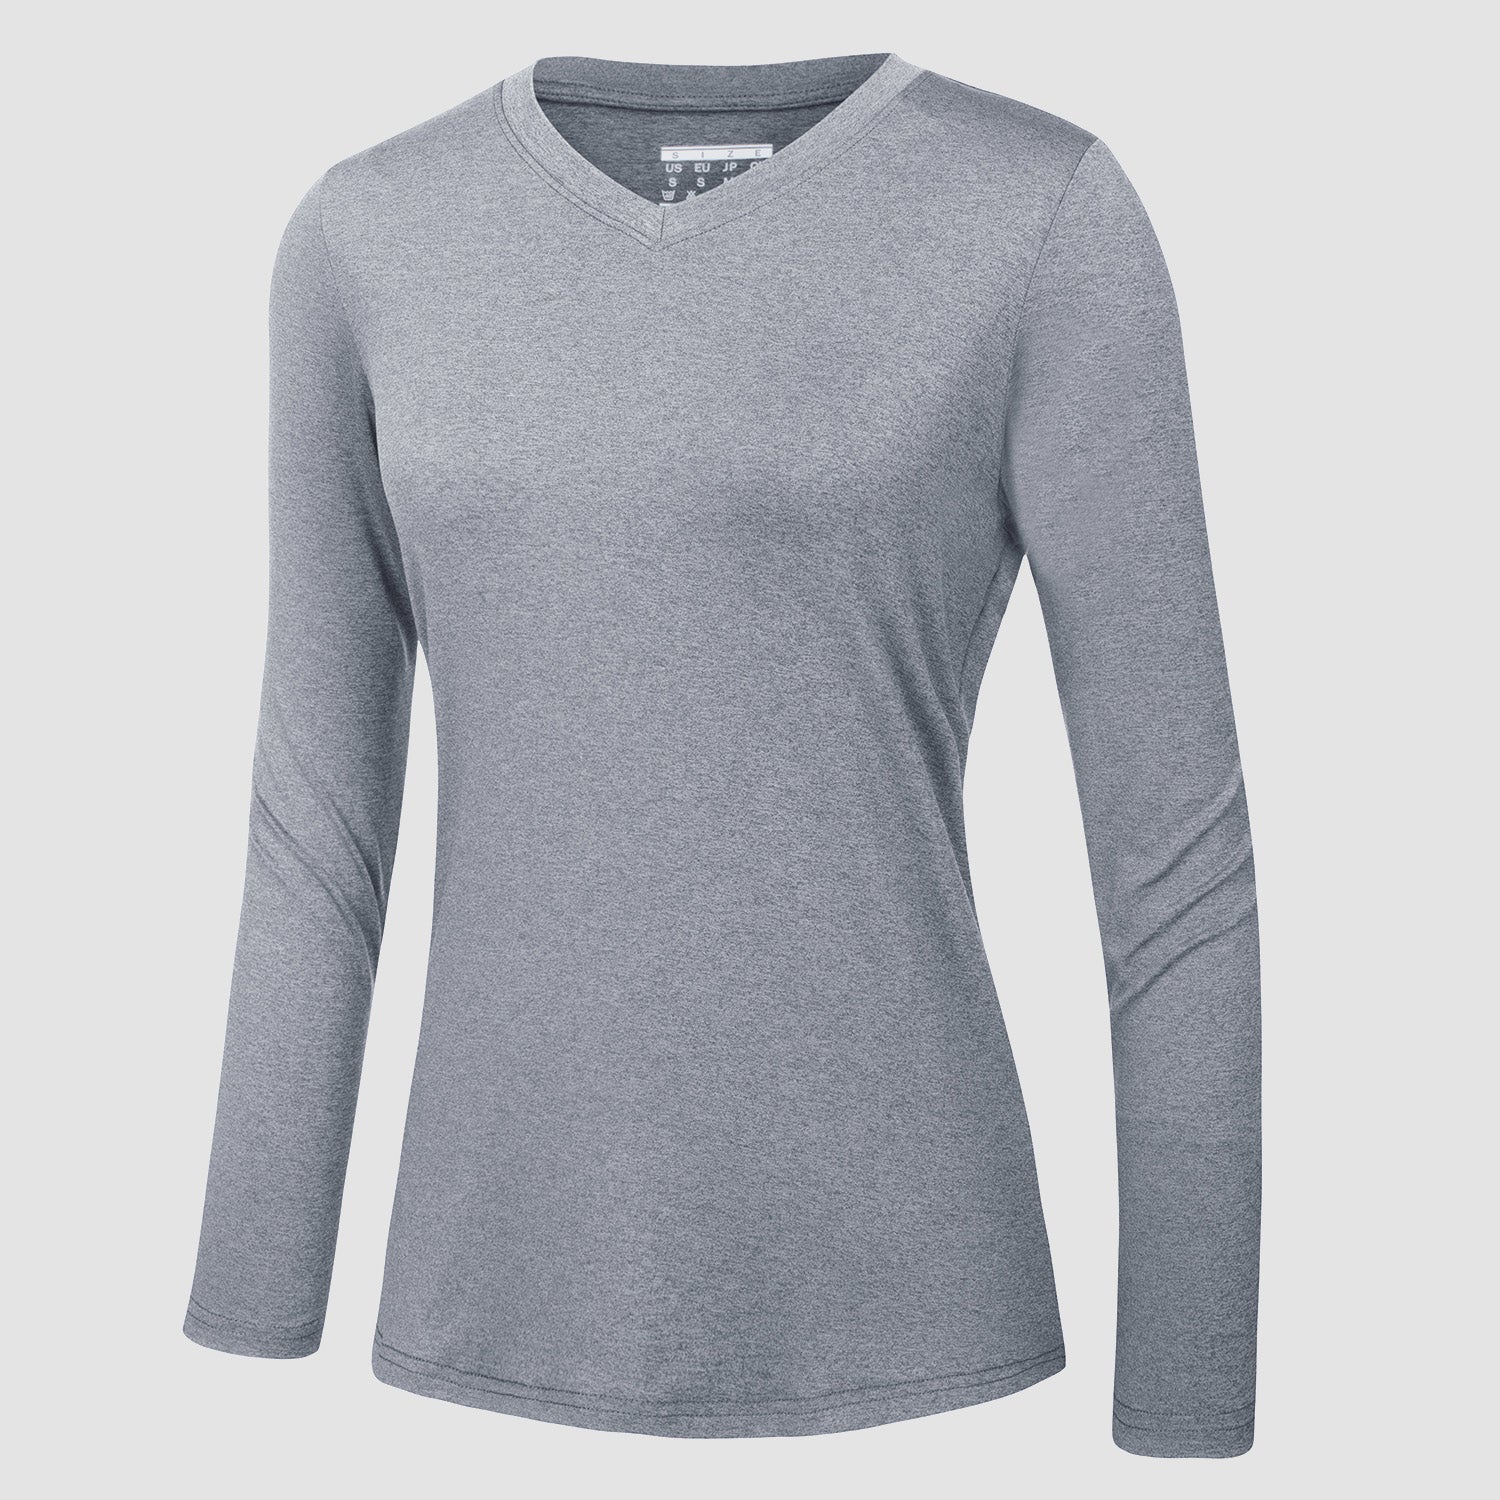 Women's Long Sleeve Shirt V Neck SPF Shirts UPF 50+ Quick Dry Workout Hiking Tee Shirts Rashguard, Light Grey / M